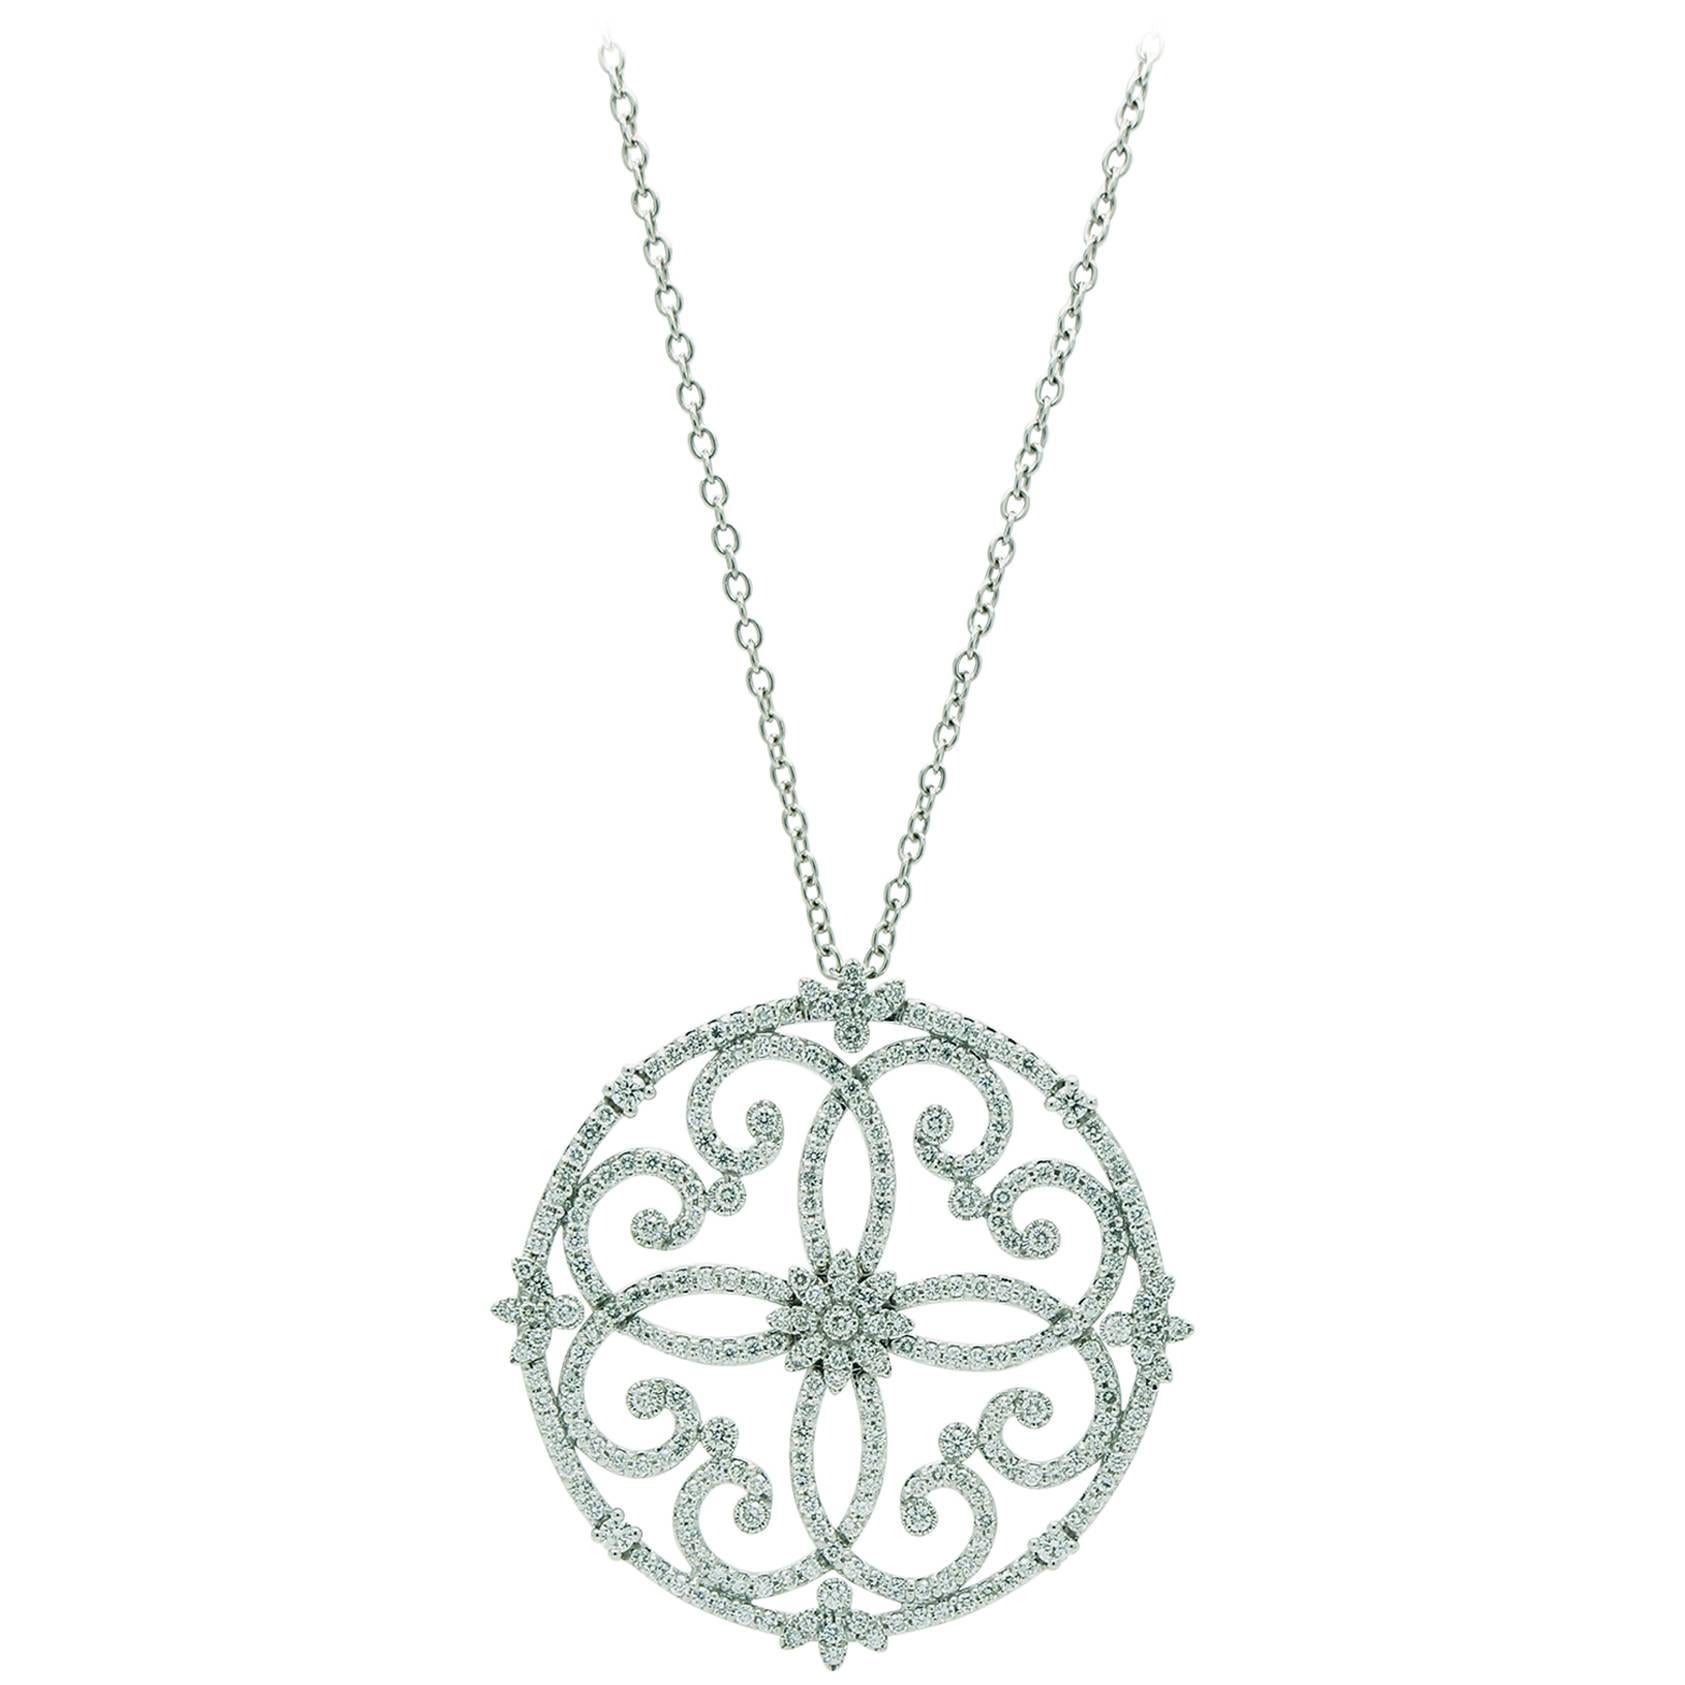 Ferrucci & Co. Diamond Necklace in 18 Karat White Gold, Handmade in Italy